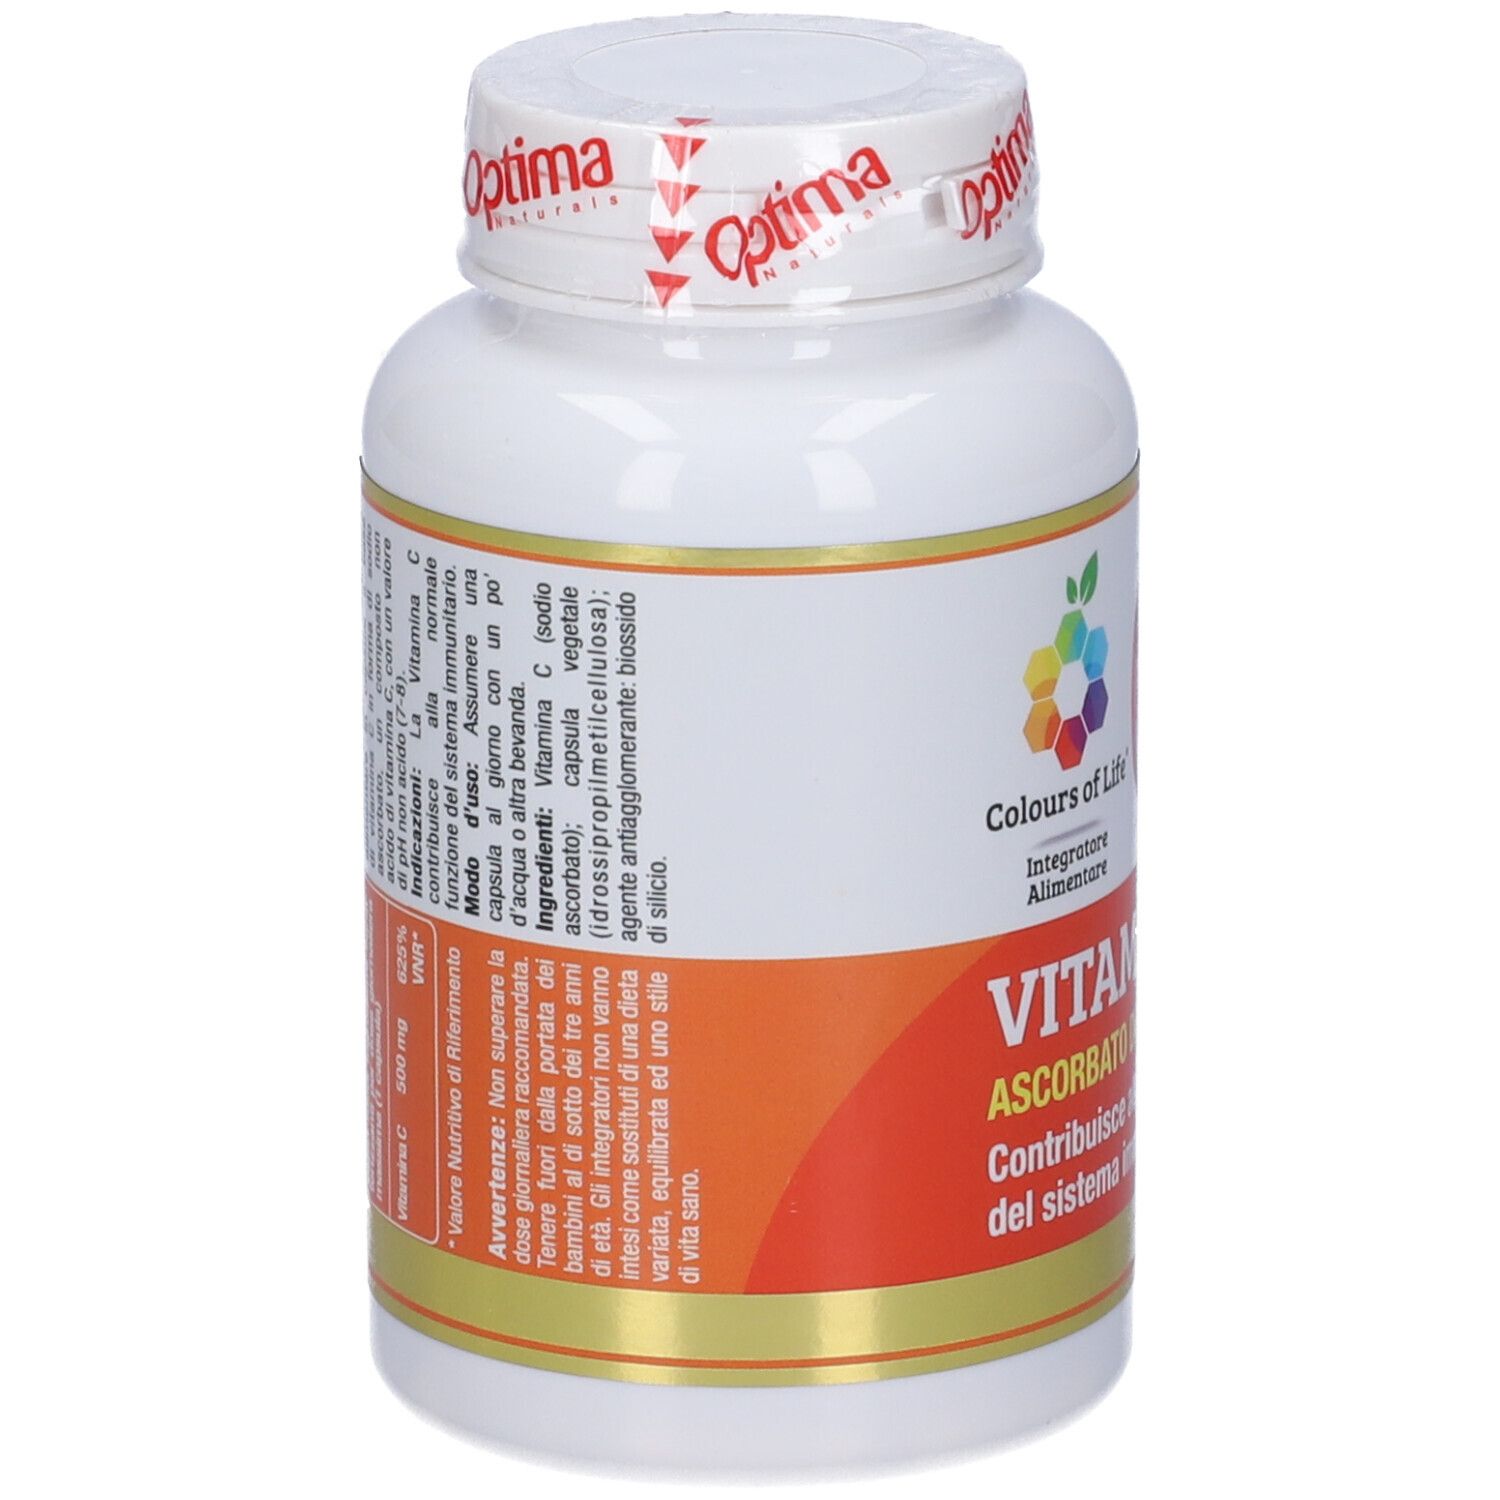 Colours of Life® Vitamina C 500